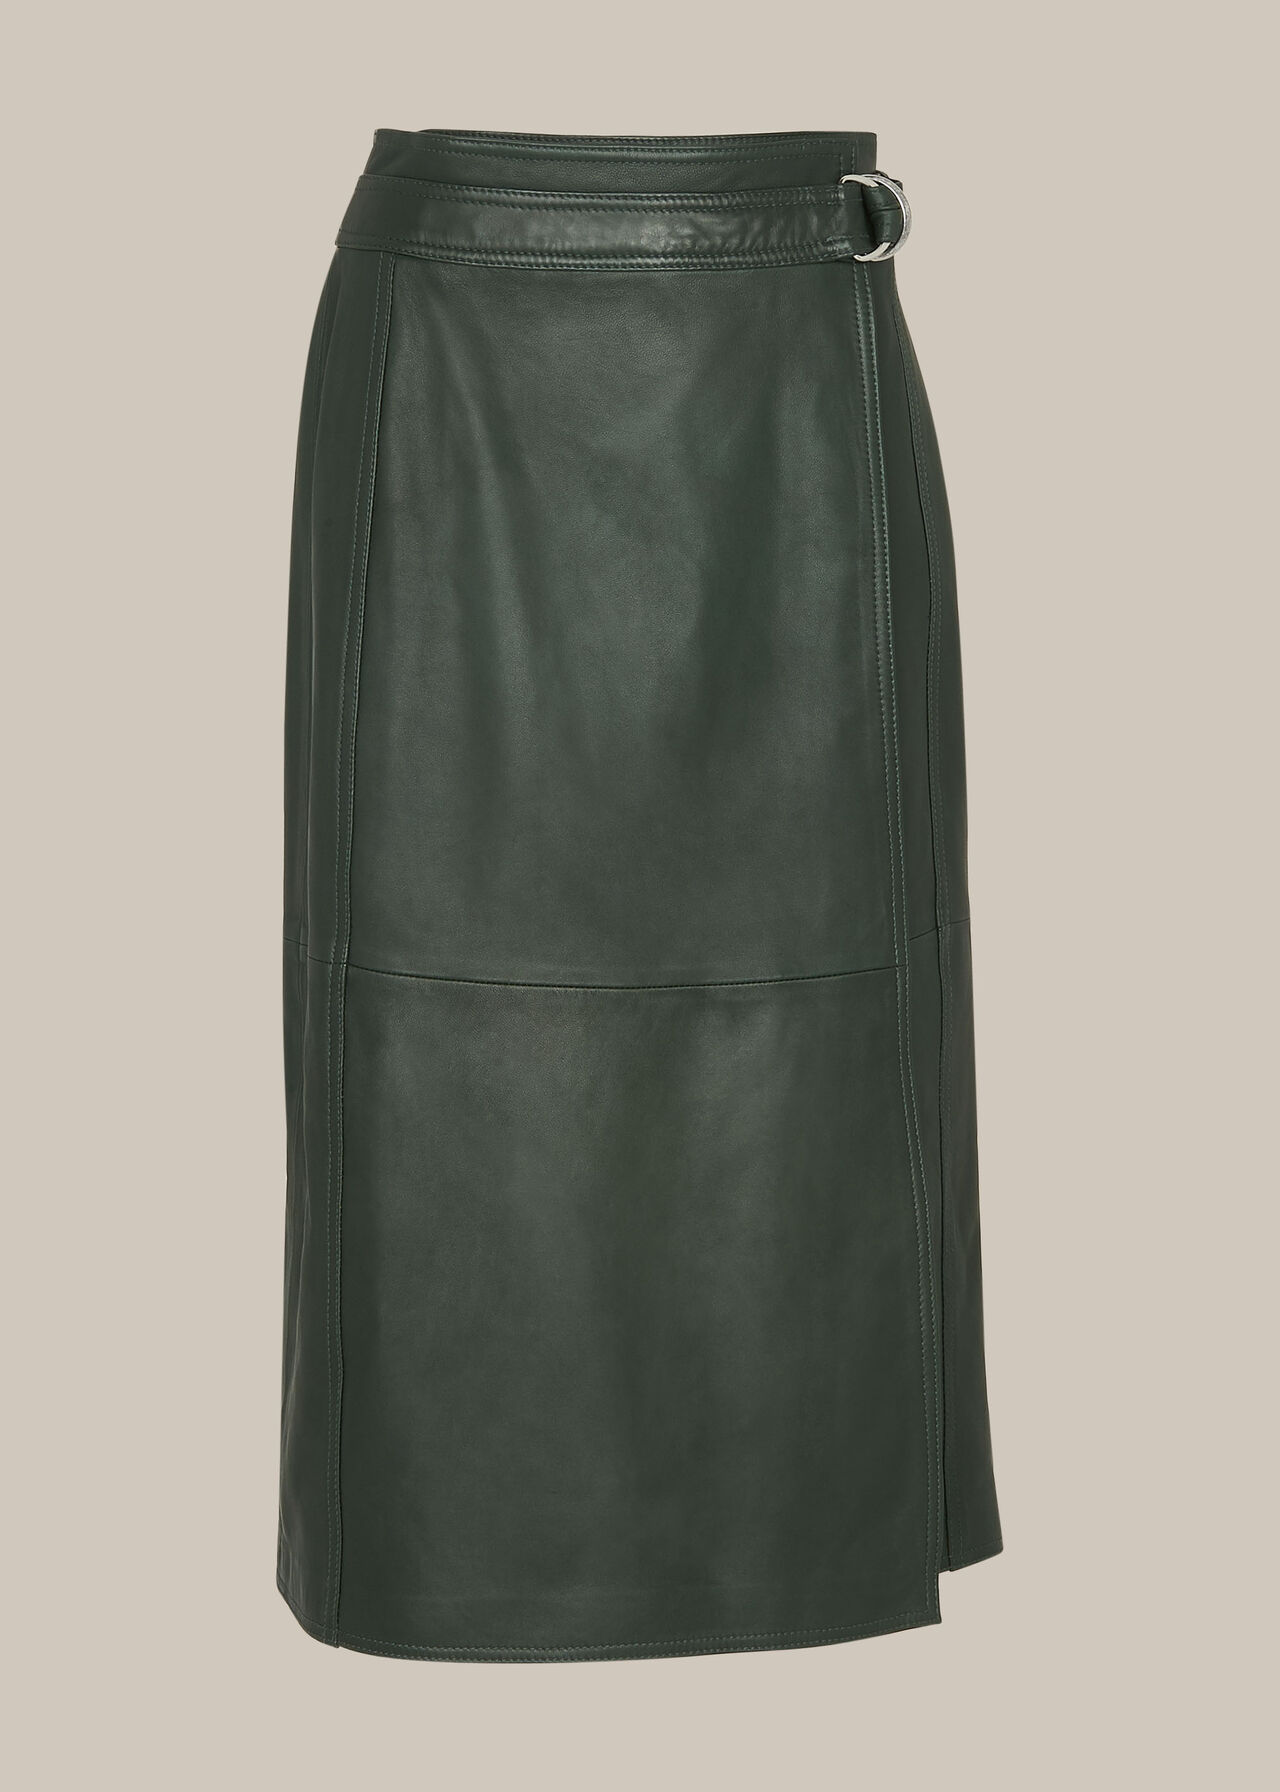 Selina Leather Wrap Skirt